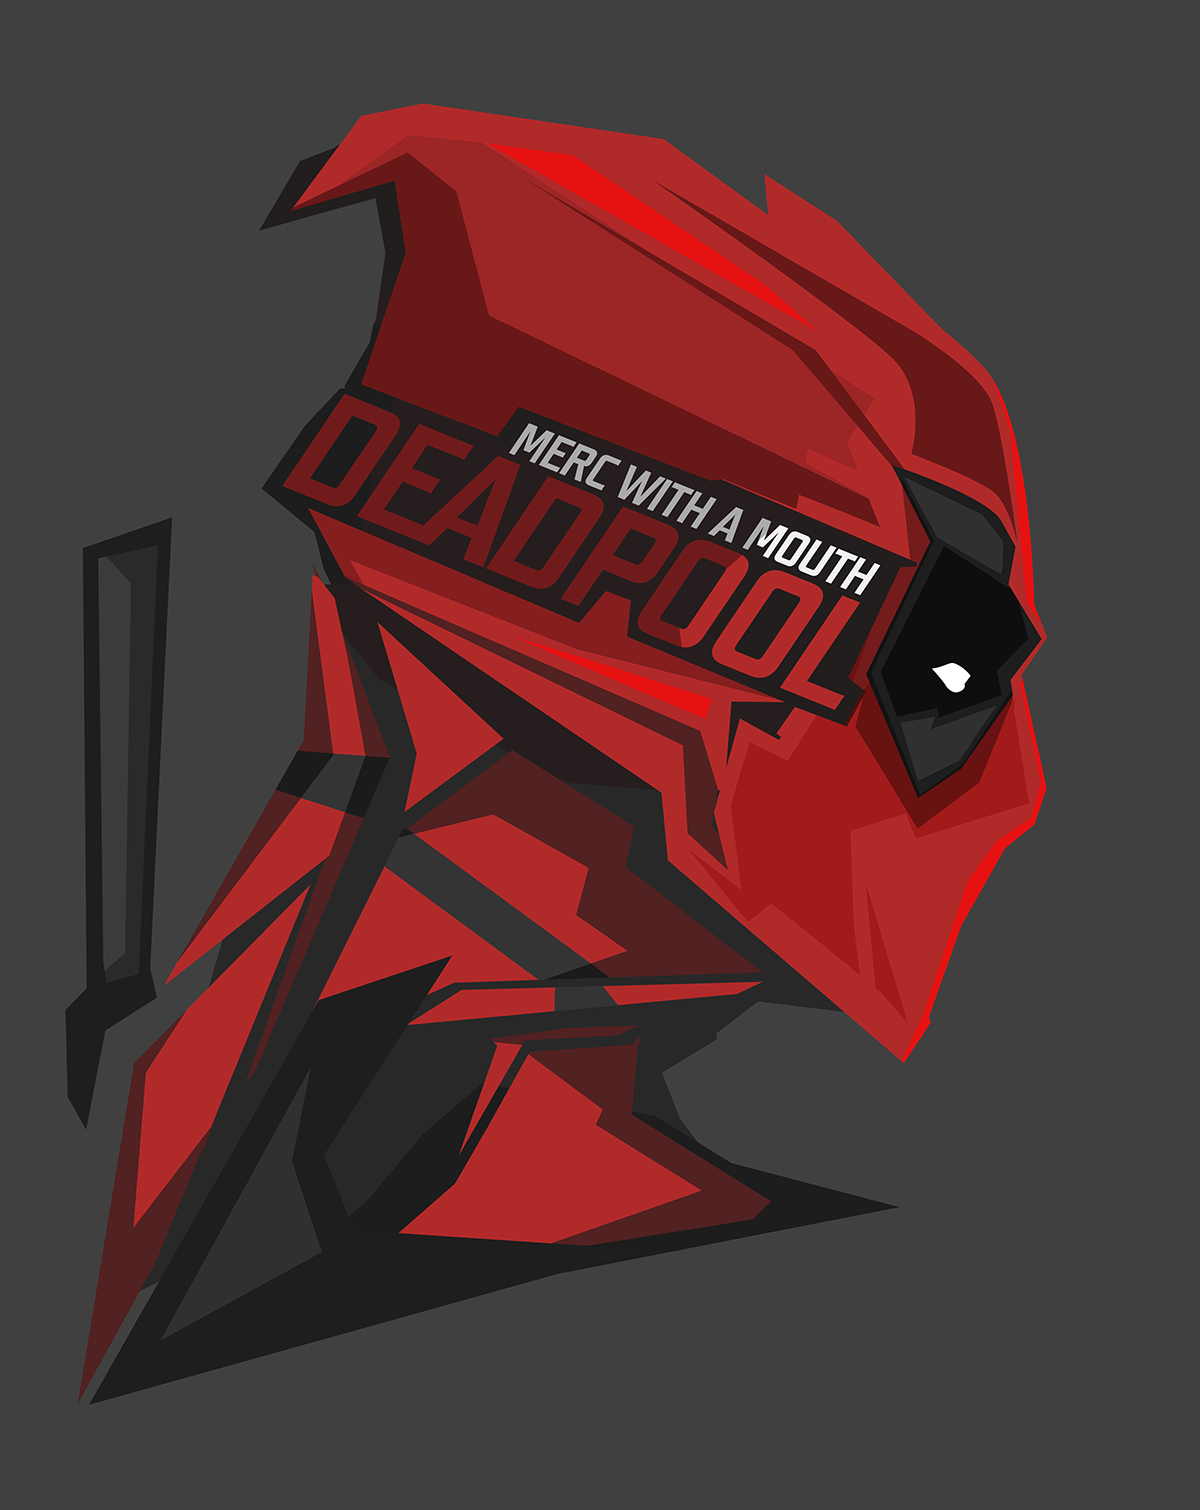 General 1200x1510 Marvel Comics gray background Bosslogic Deadpool antiheroes profile artwork